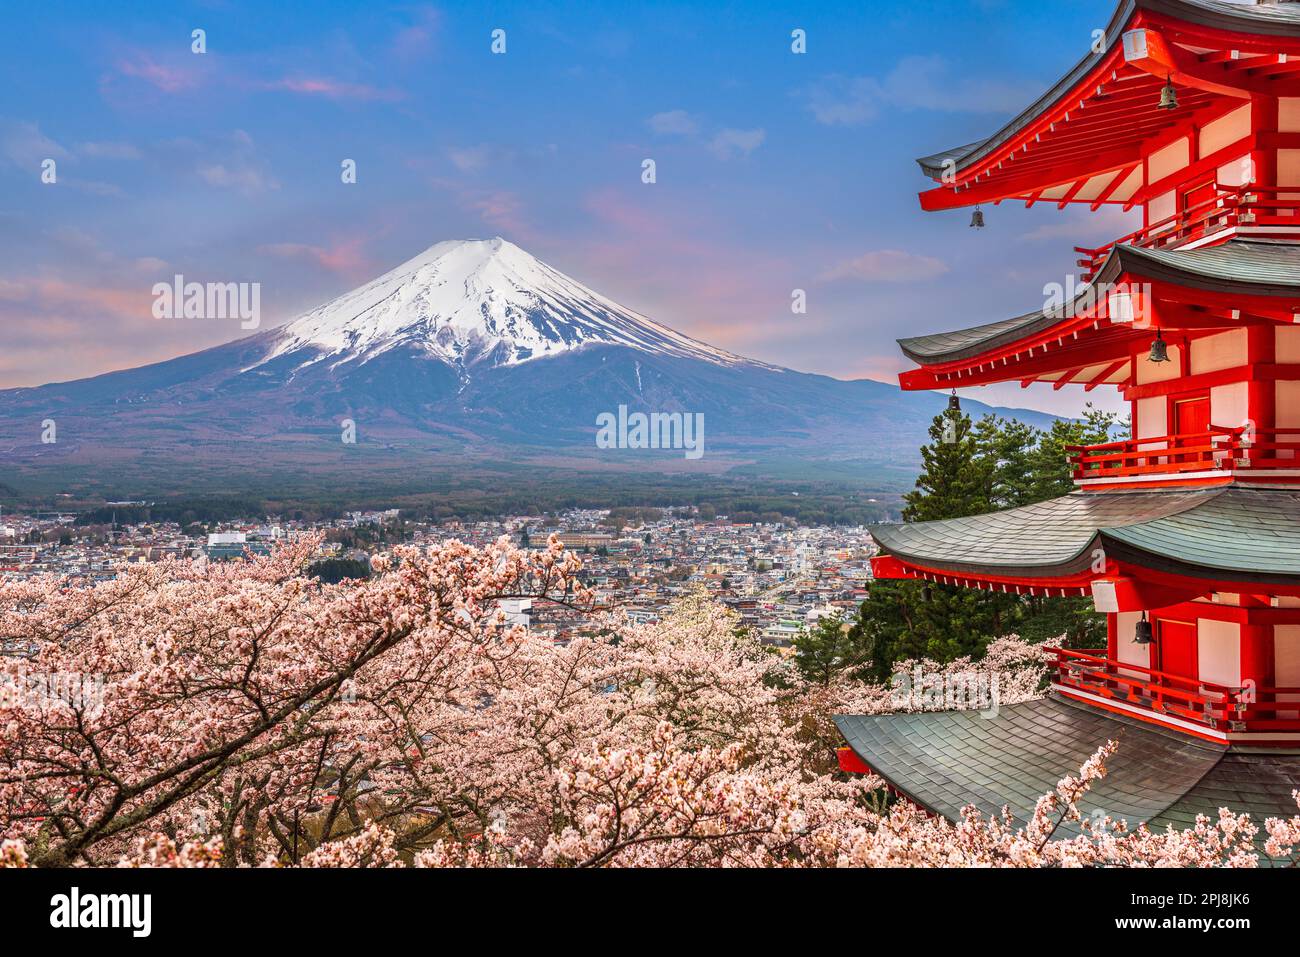 Fujiyoshida, Japan at Chureito Pagoda and Mt. Fuji in the spring with cherry blossoms. Stock Photo